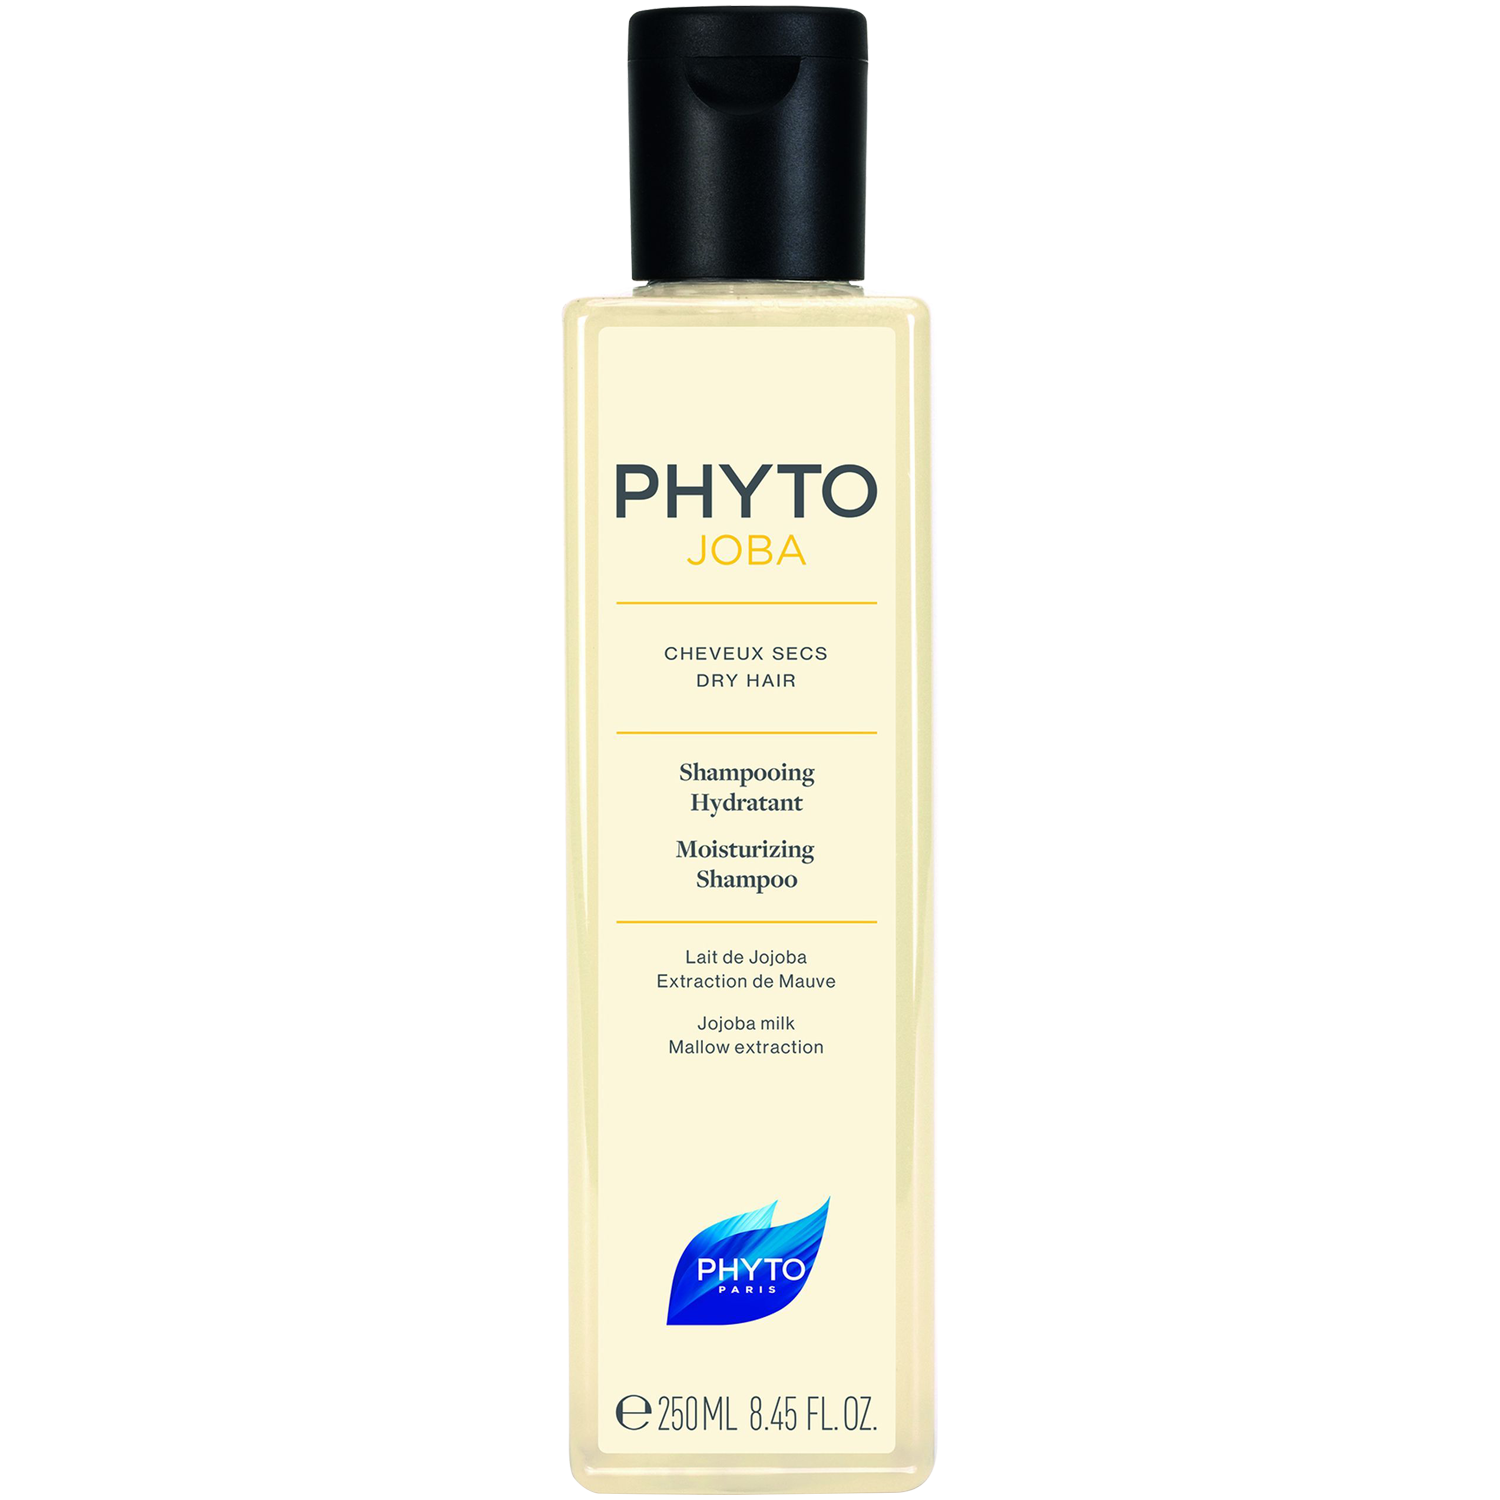 phytocyane szampon hebe